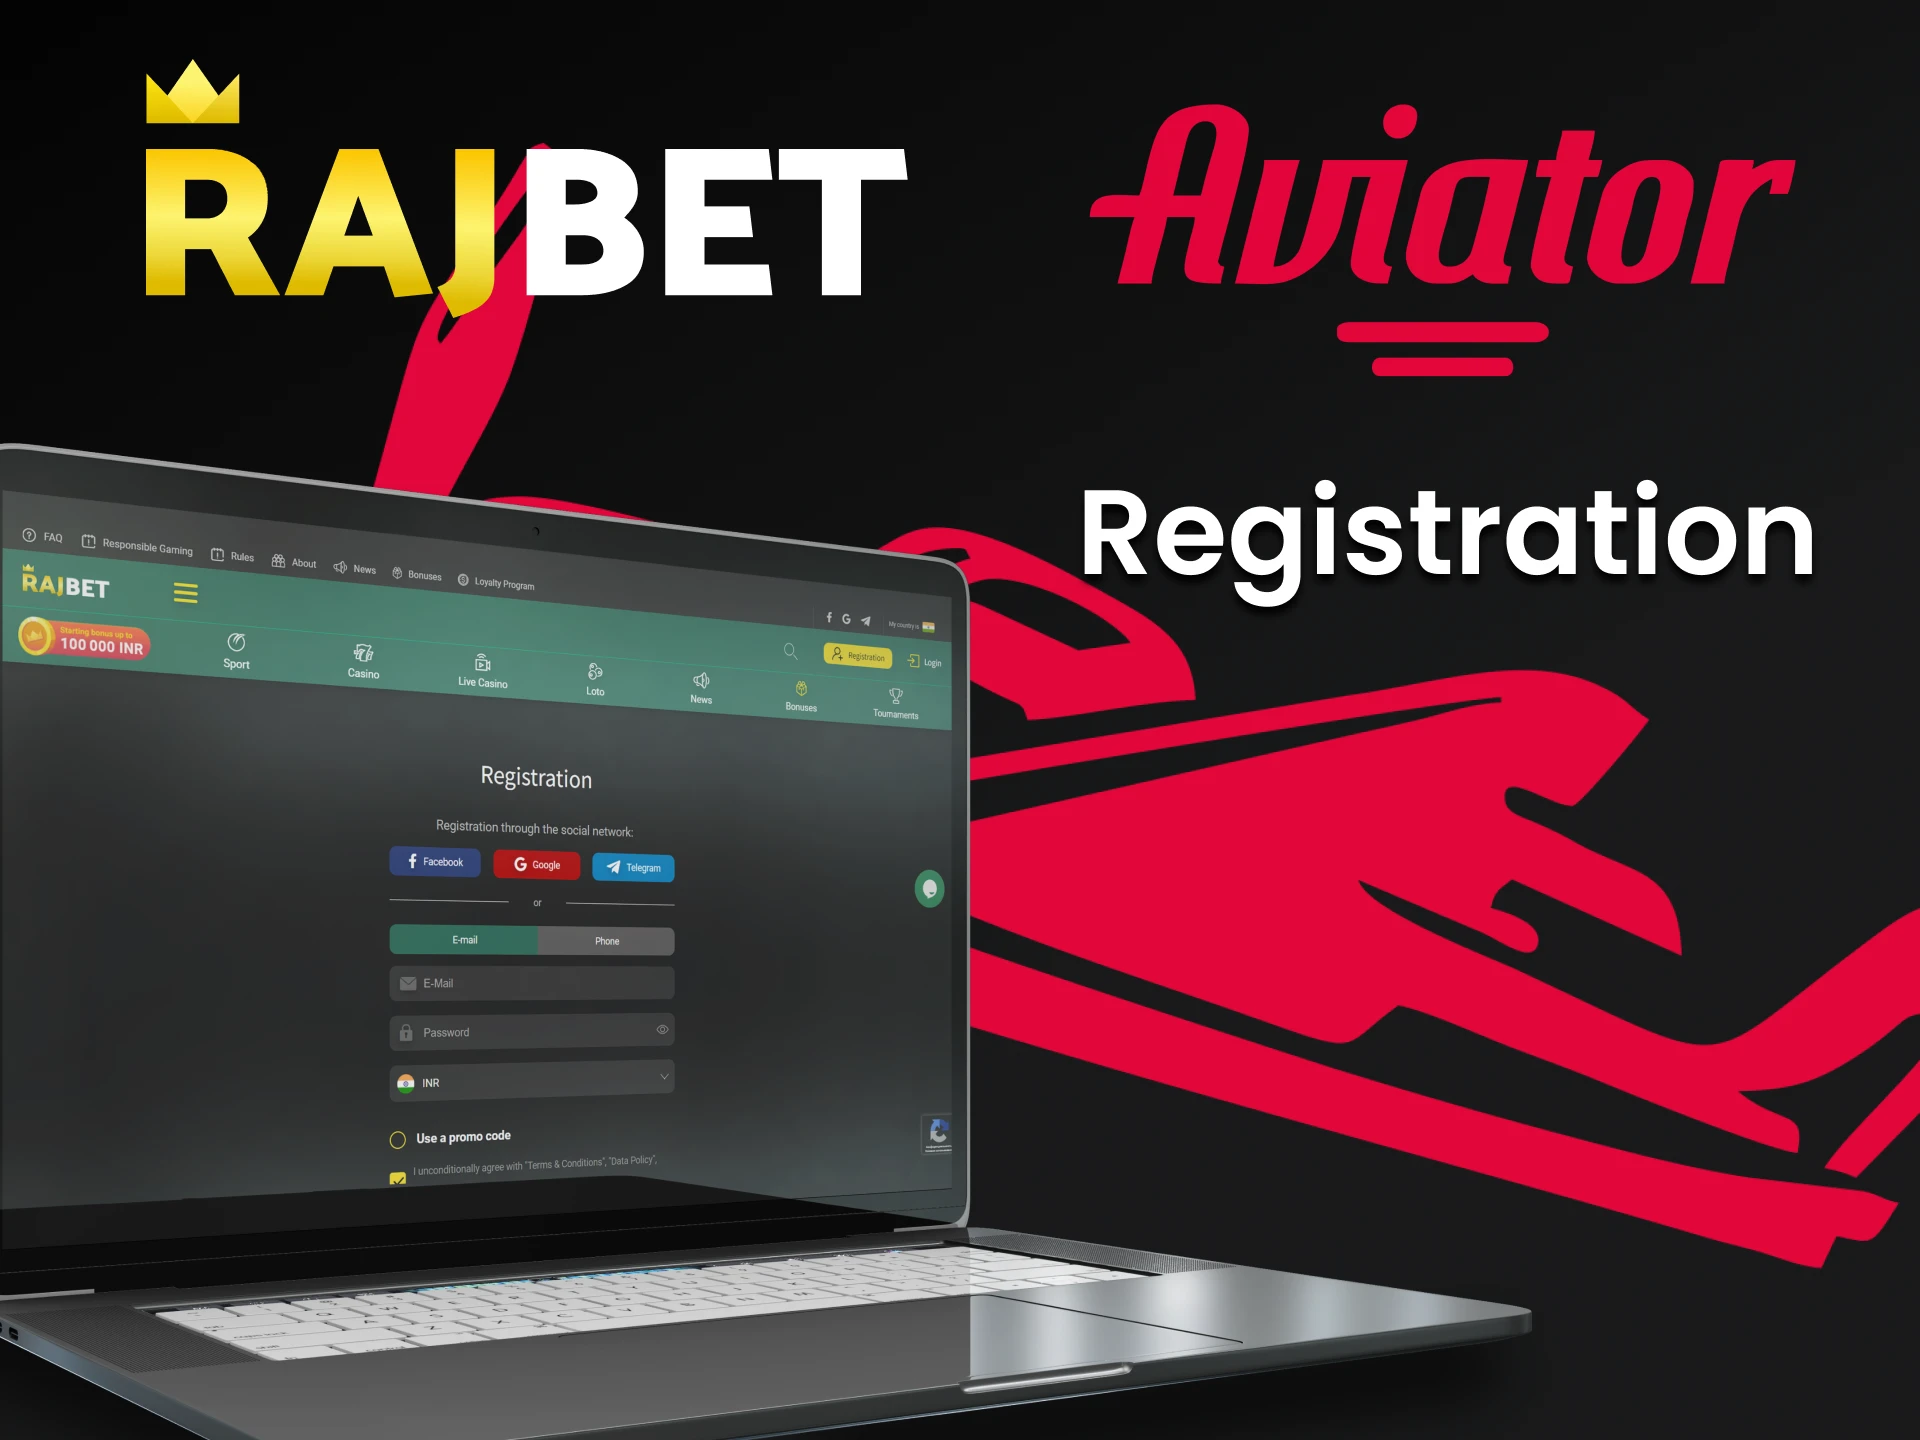 Register on Rajbet to play Aviator.